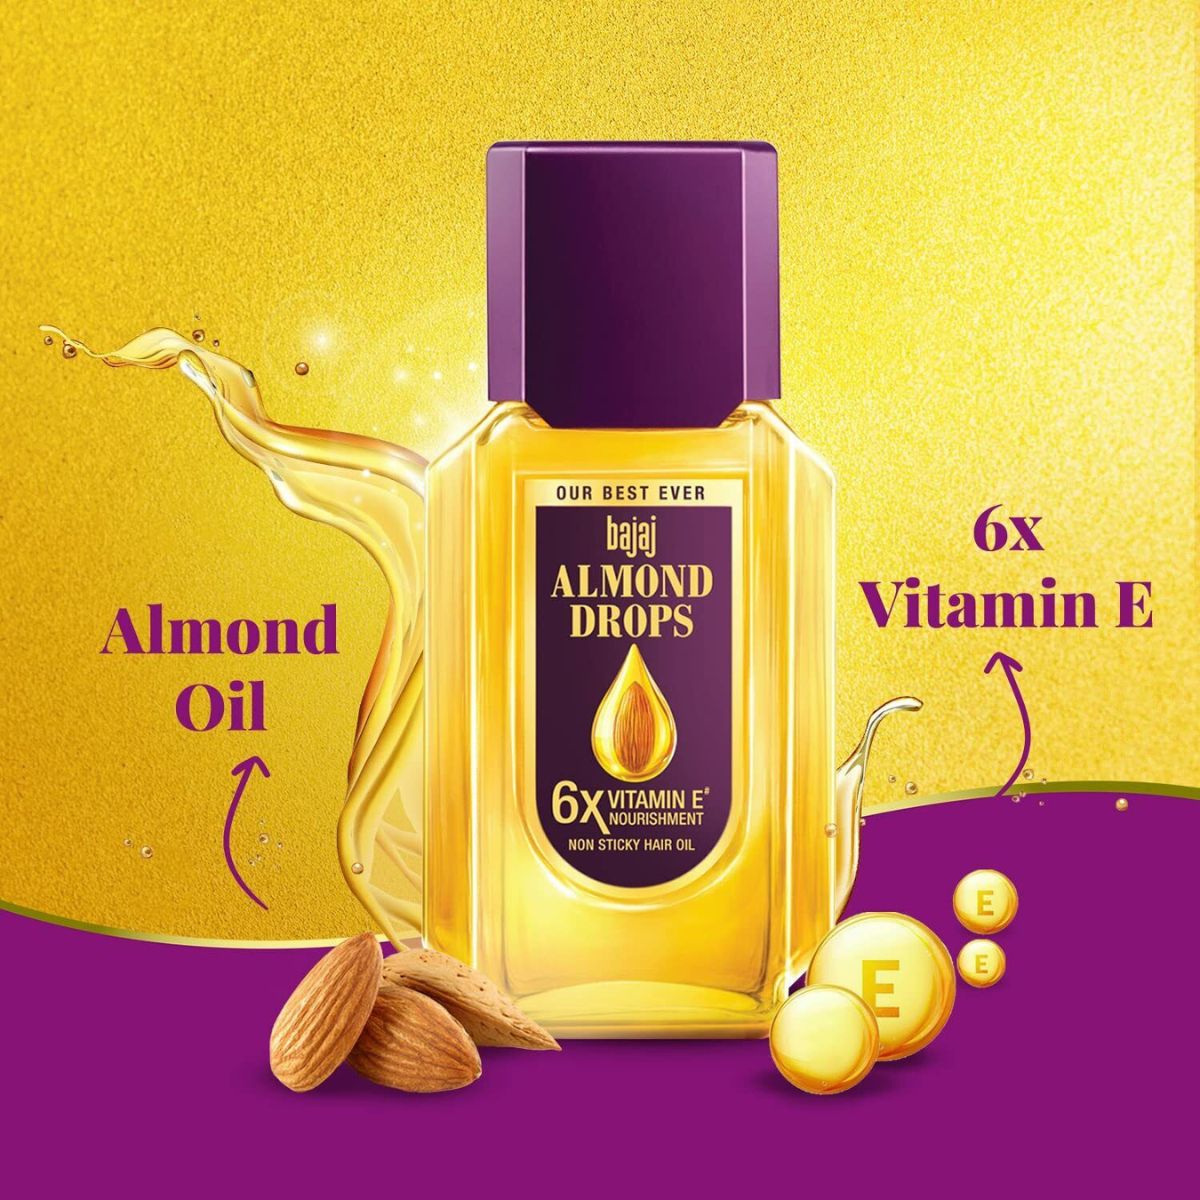 Bajaj Almond Drops - 6X Vitamin E Nourishment - Non Sticky Hair Oil - 95ml